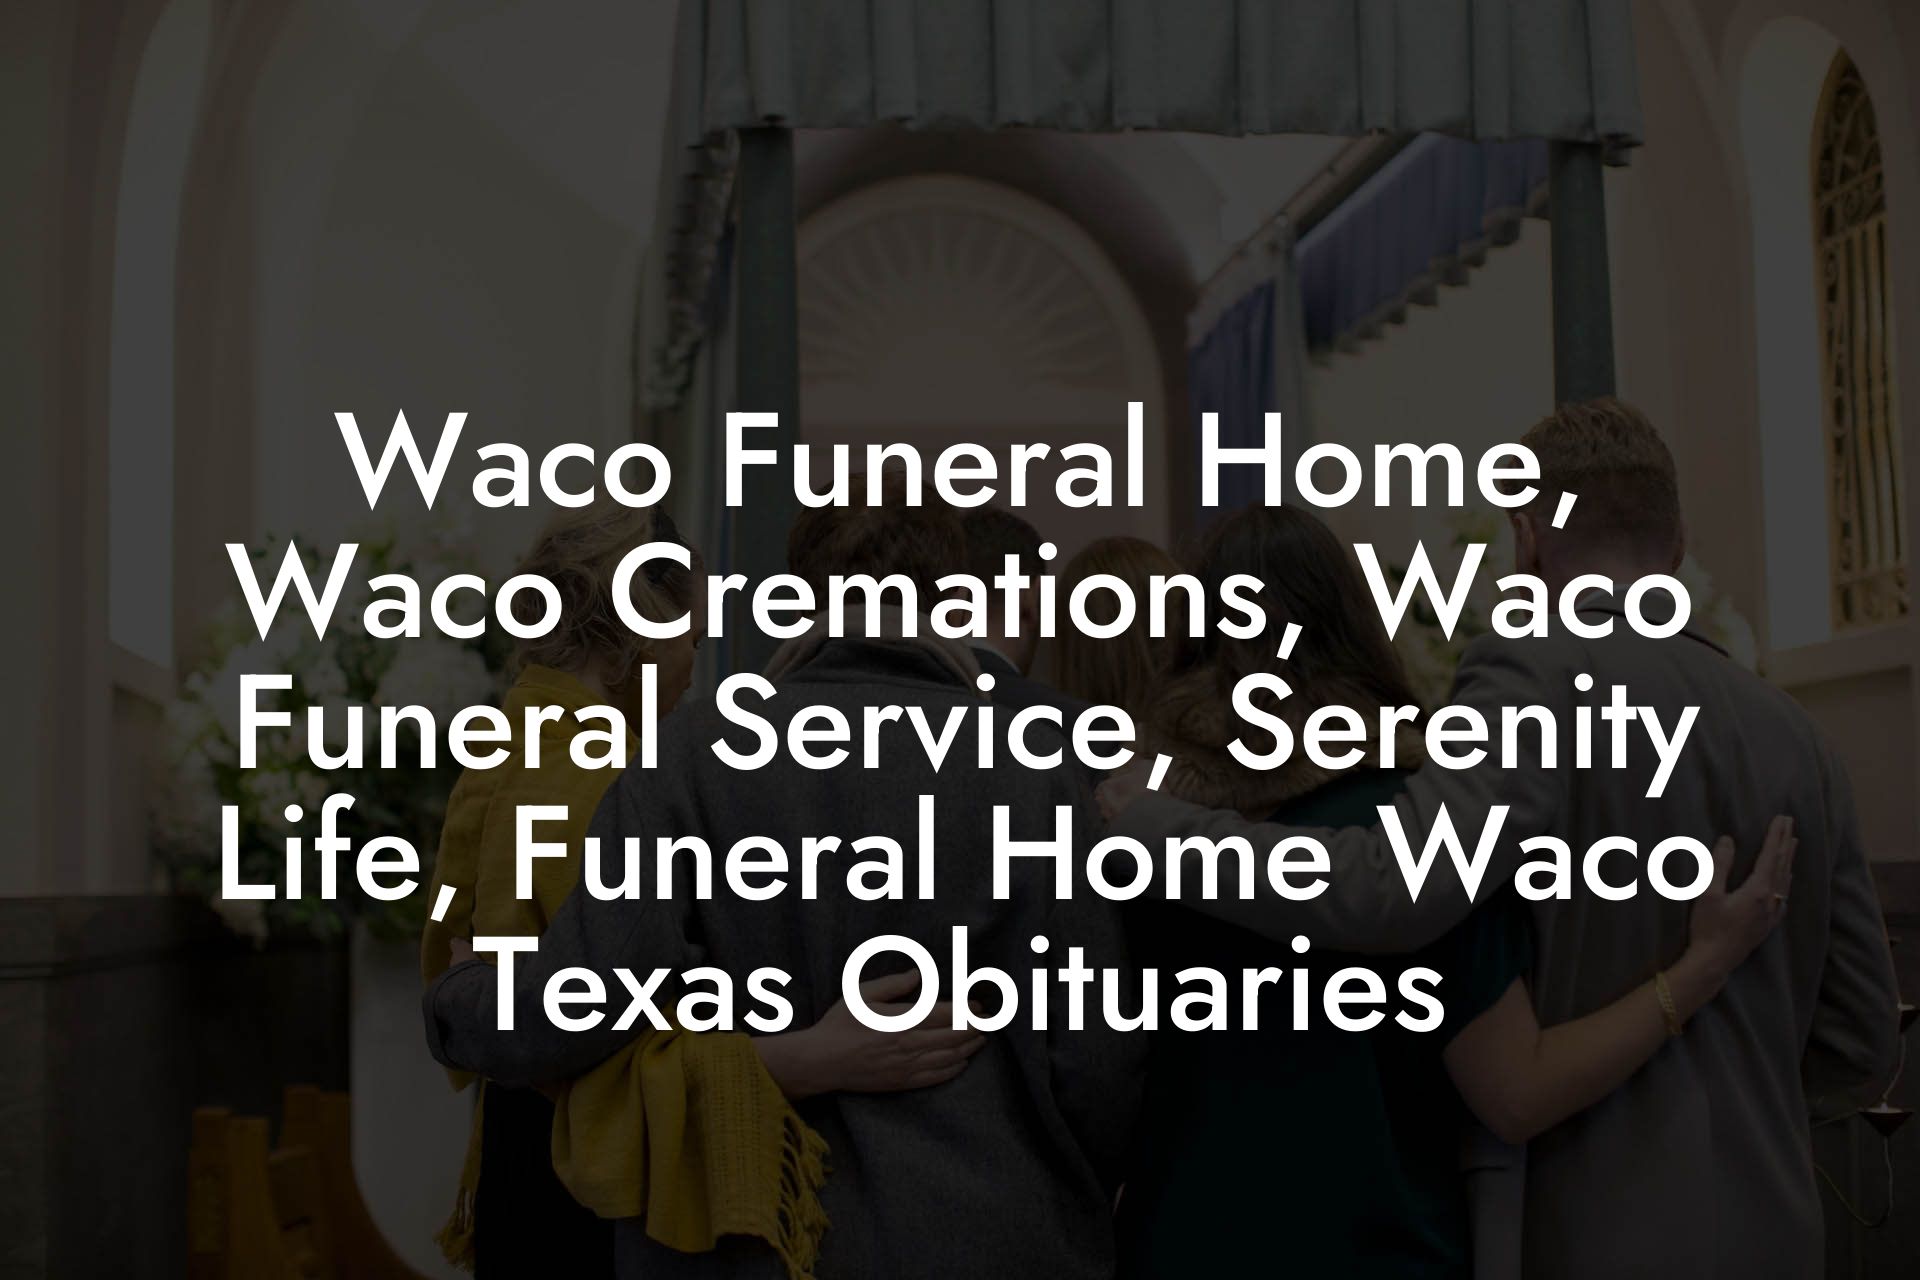 Waco Funeral Home, Waco Cremations, Waco Funeral Service, Serenity Life, Funeral Home Waco Texas Obituaries